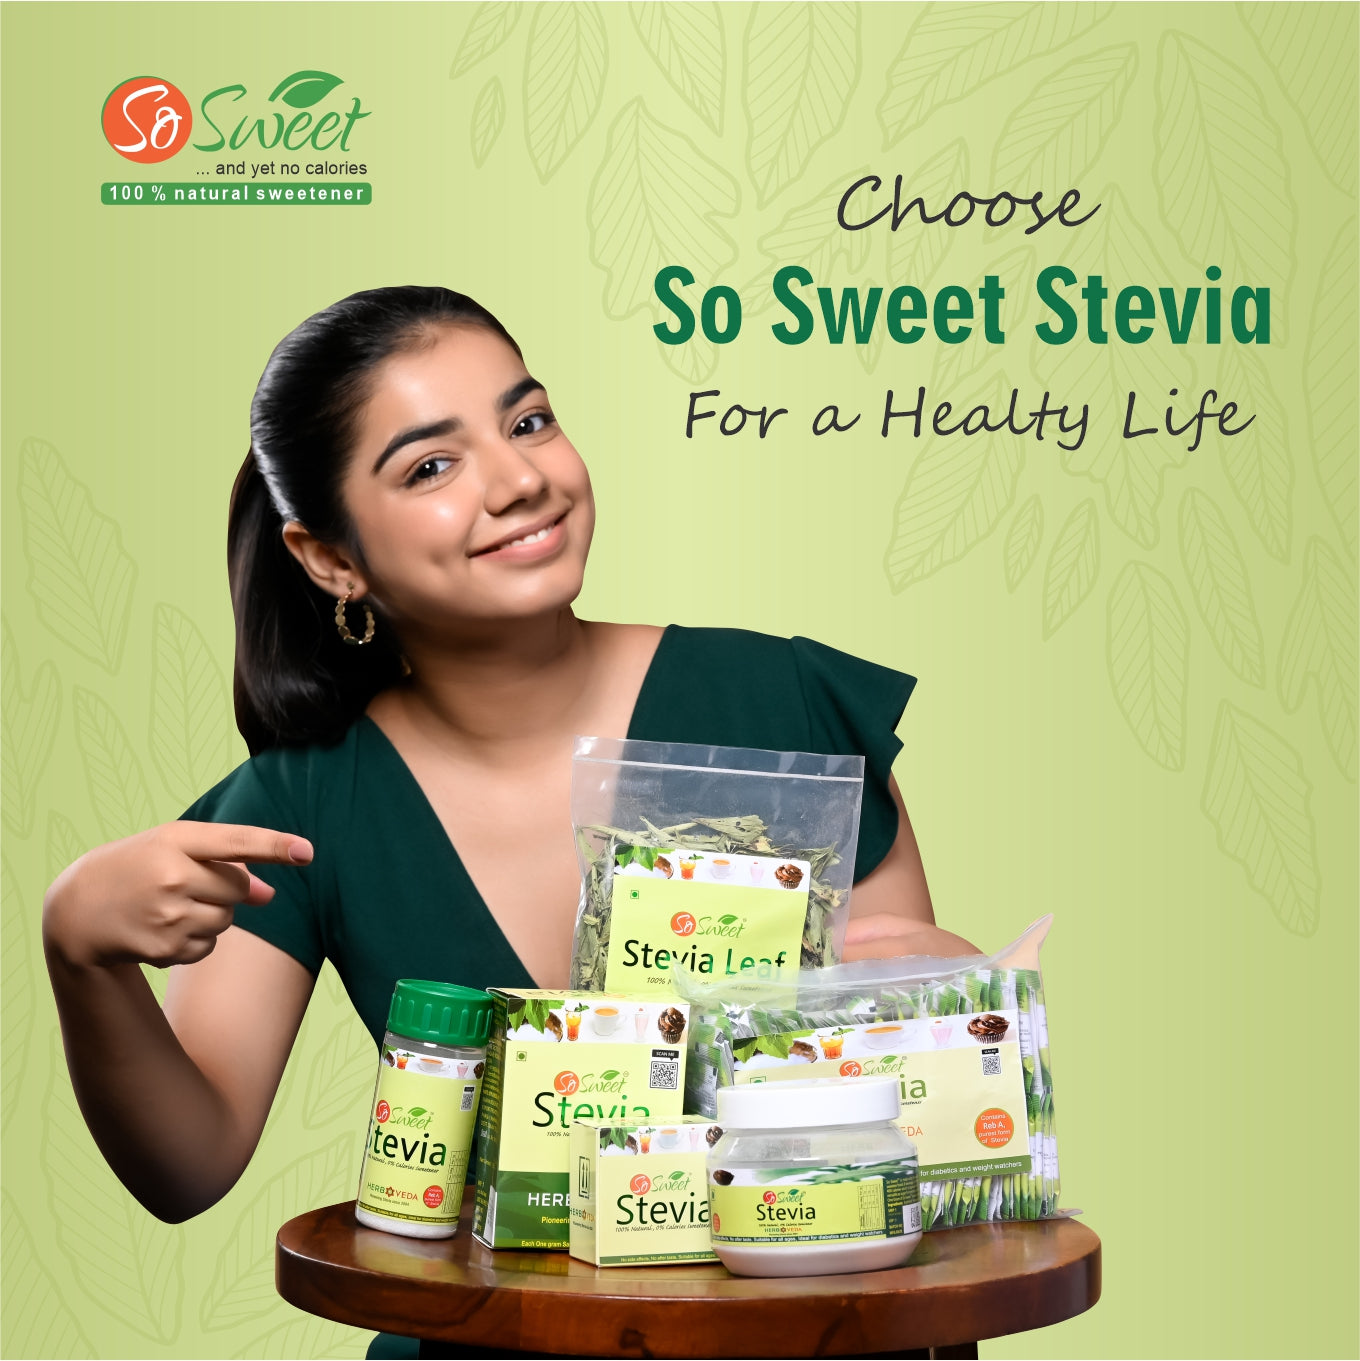 So Sweet Stevia Sugar Free Natural Low Calories Sweetener 100% Natural 400Gm | Diebetic Friendly